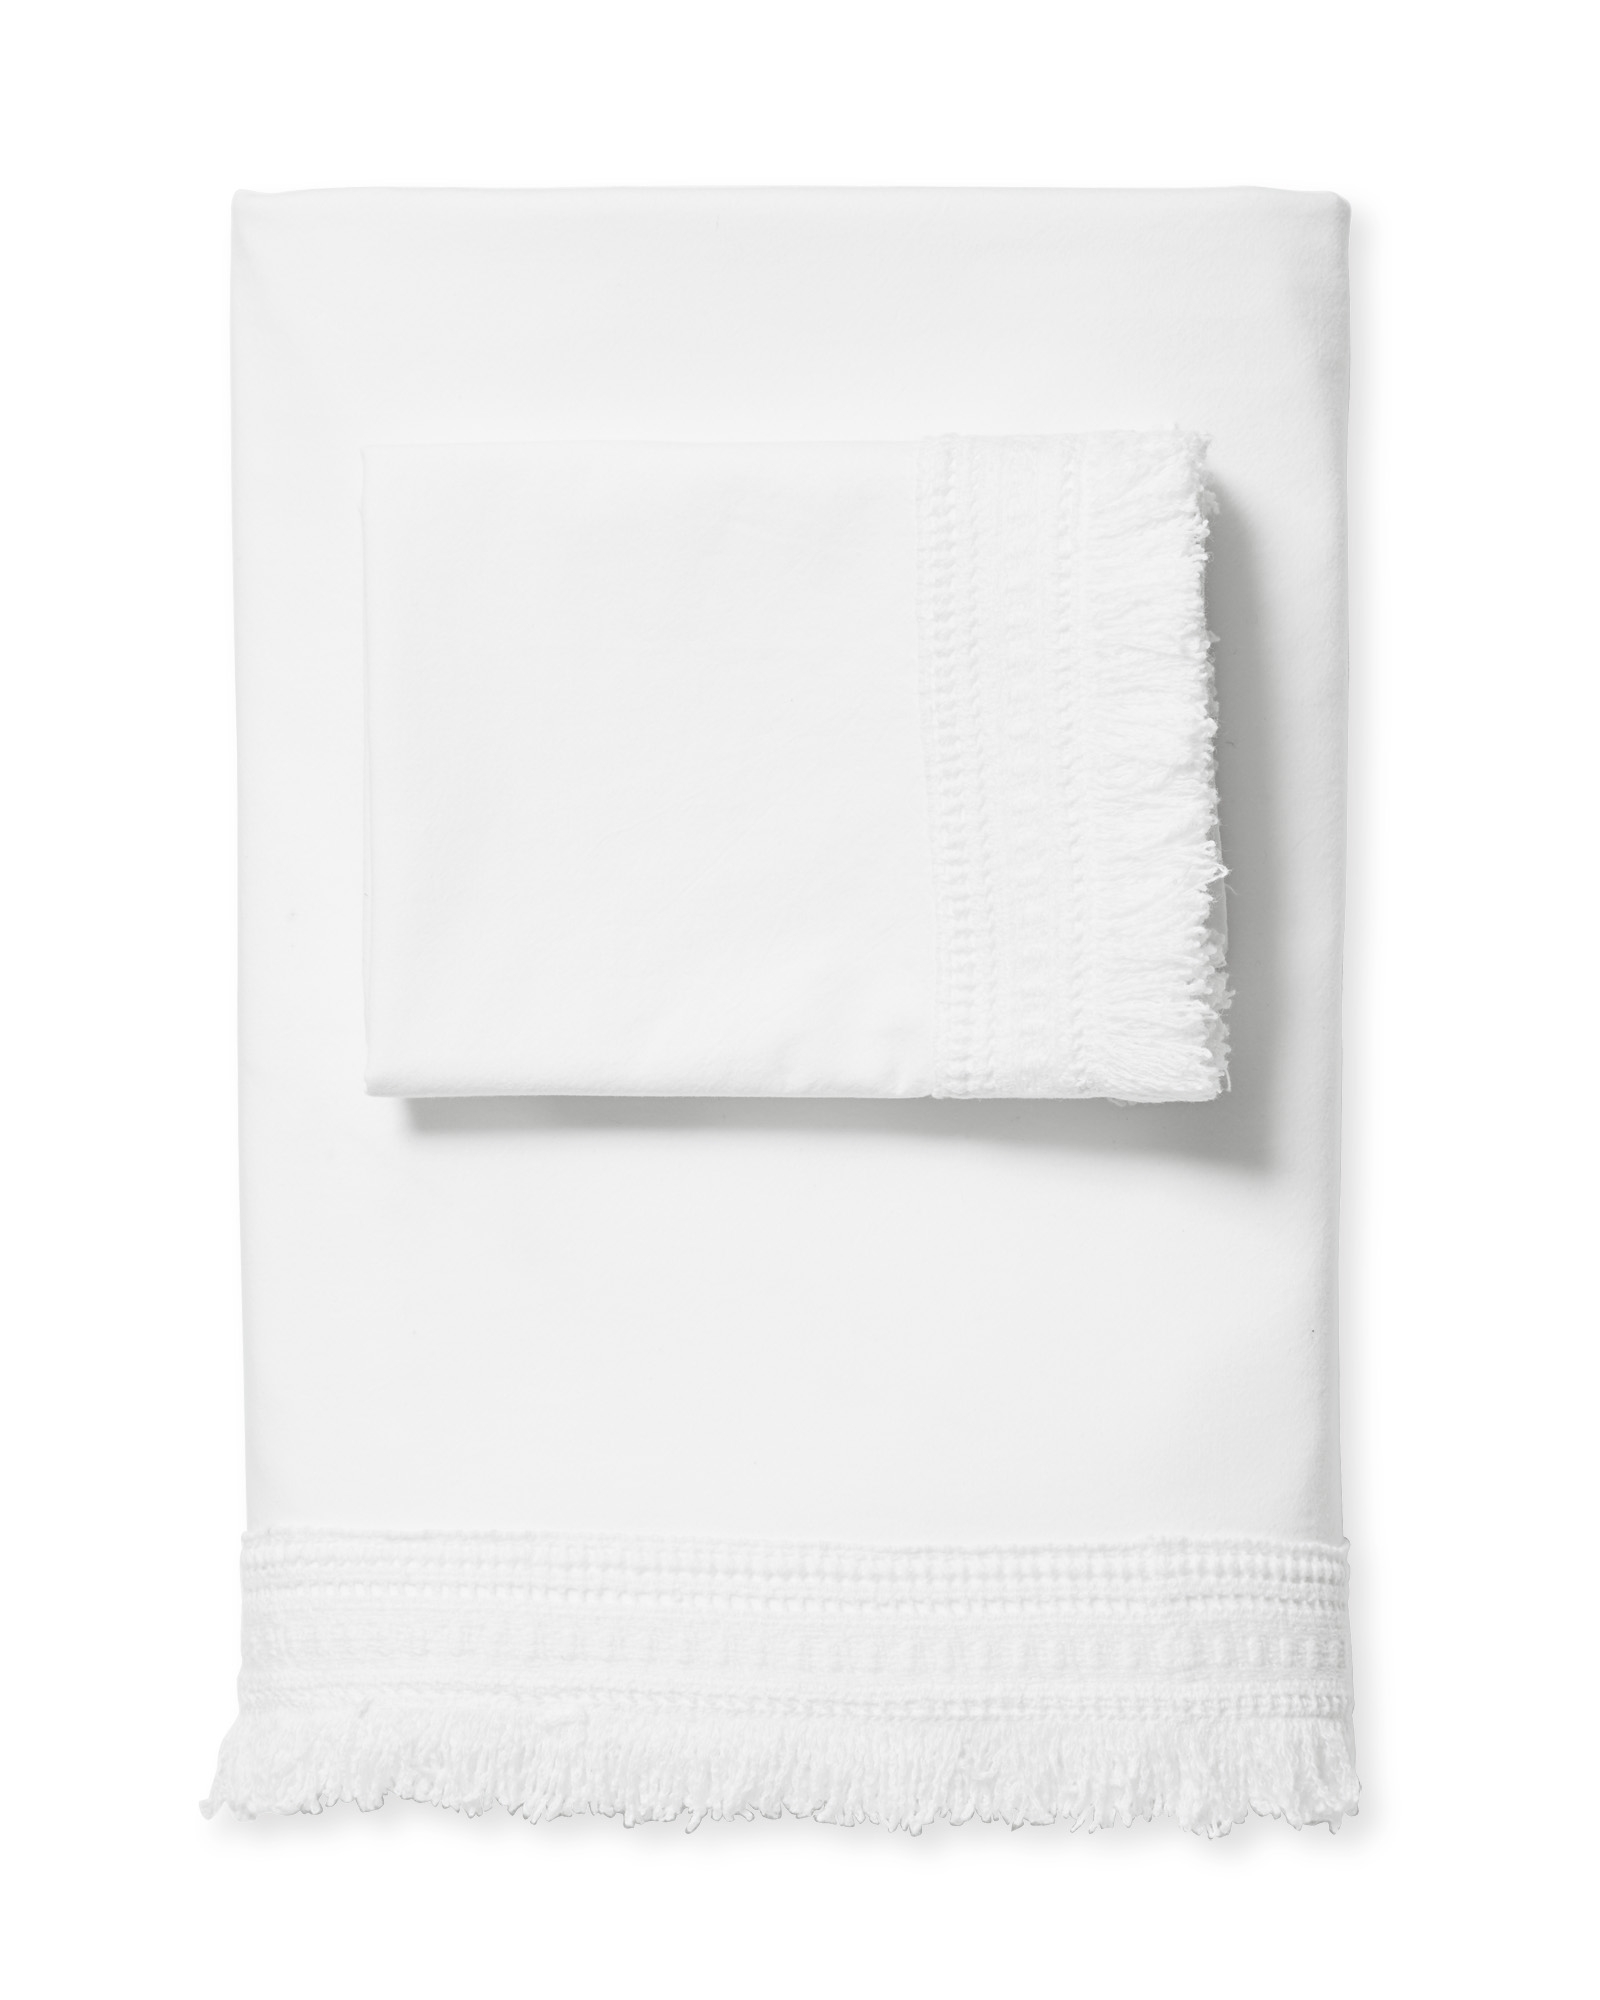 Solana California King Sheet Set - White - Image 2